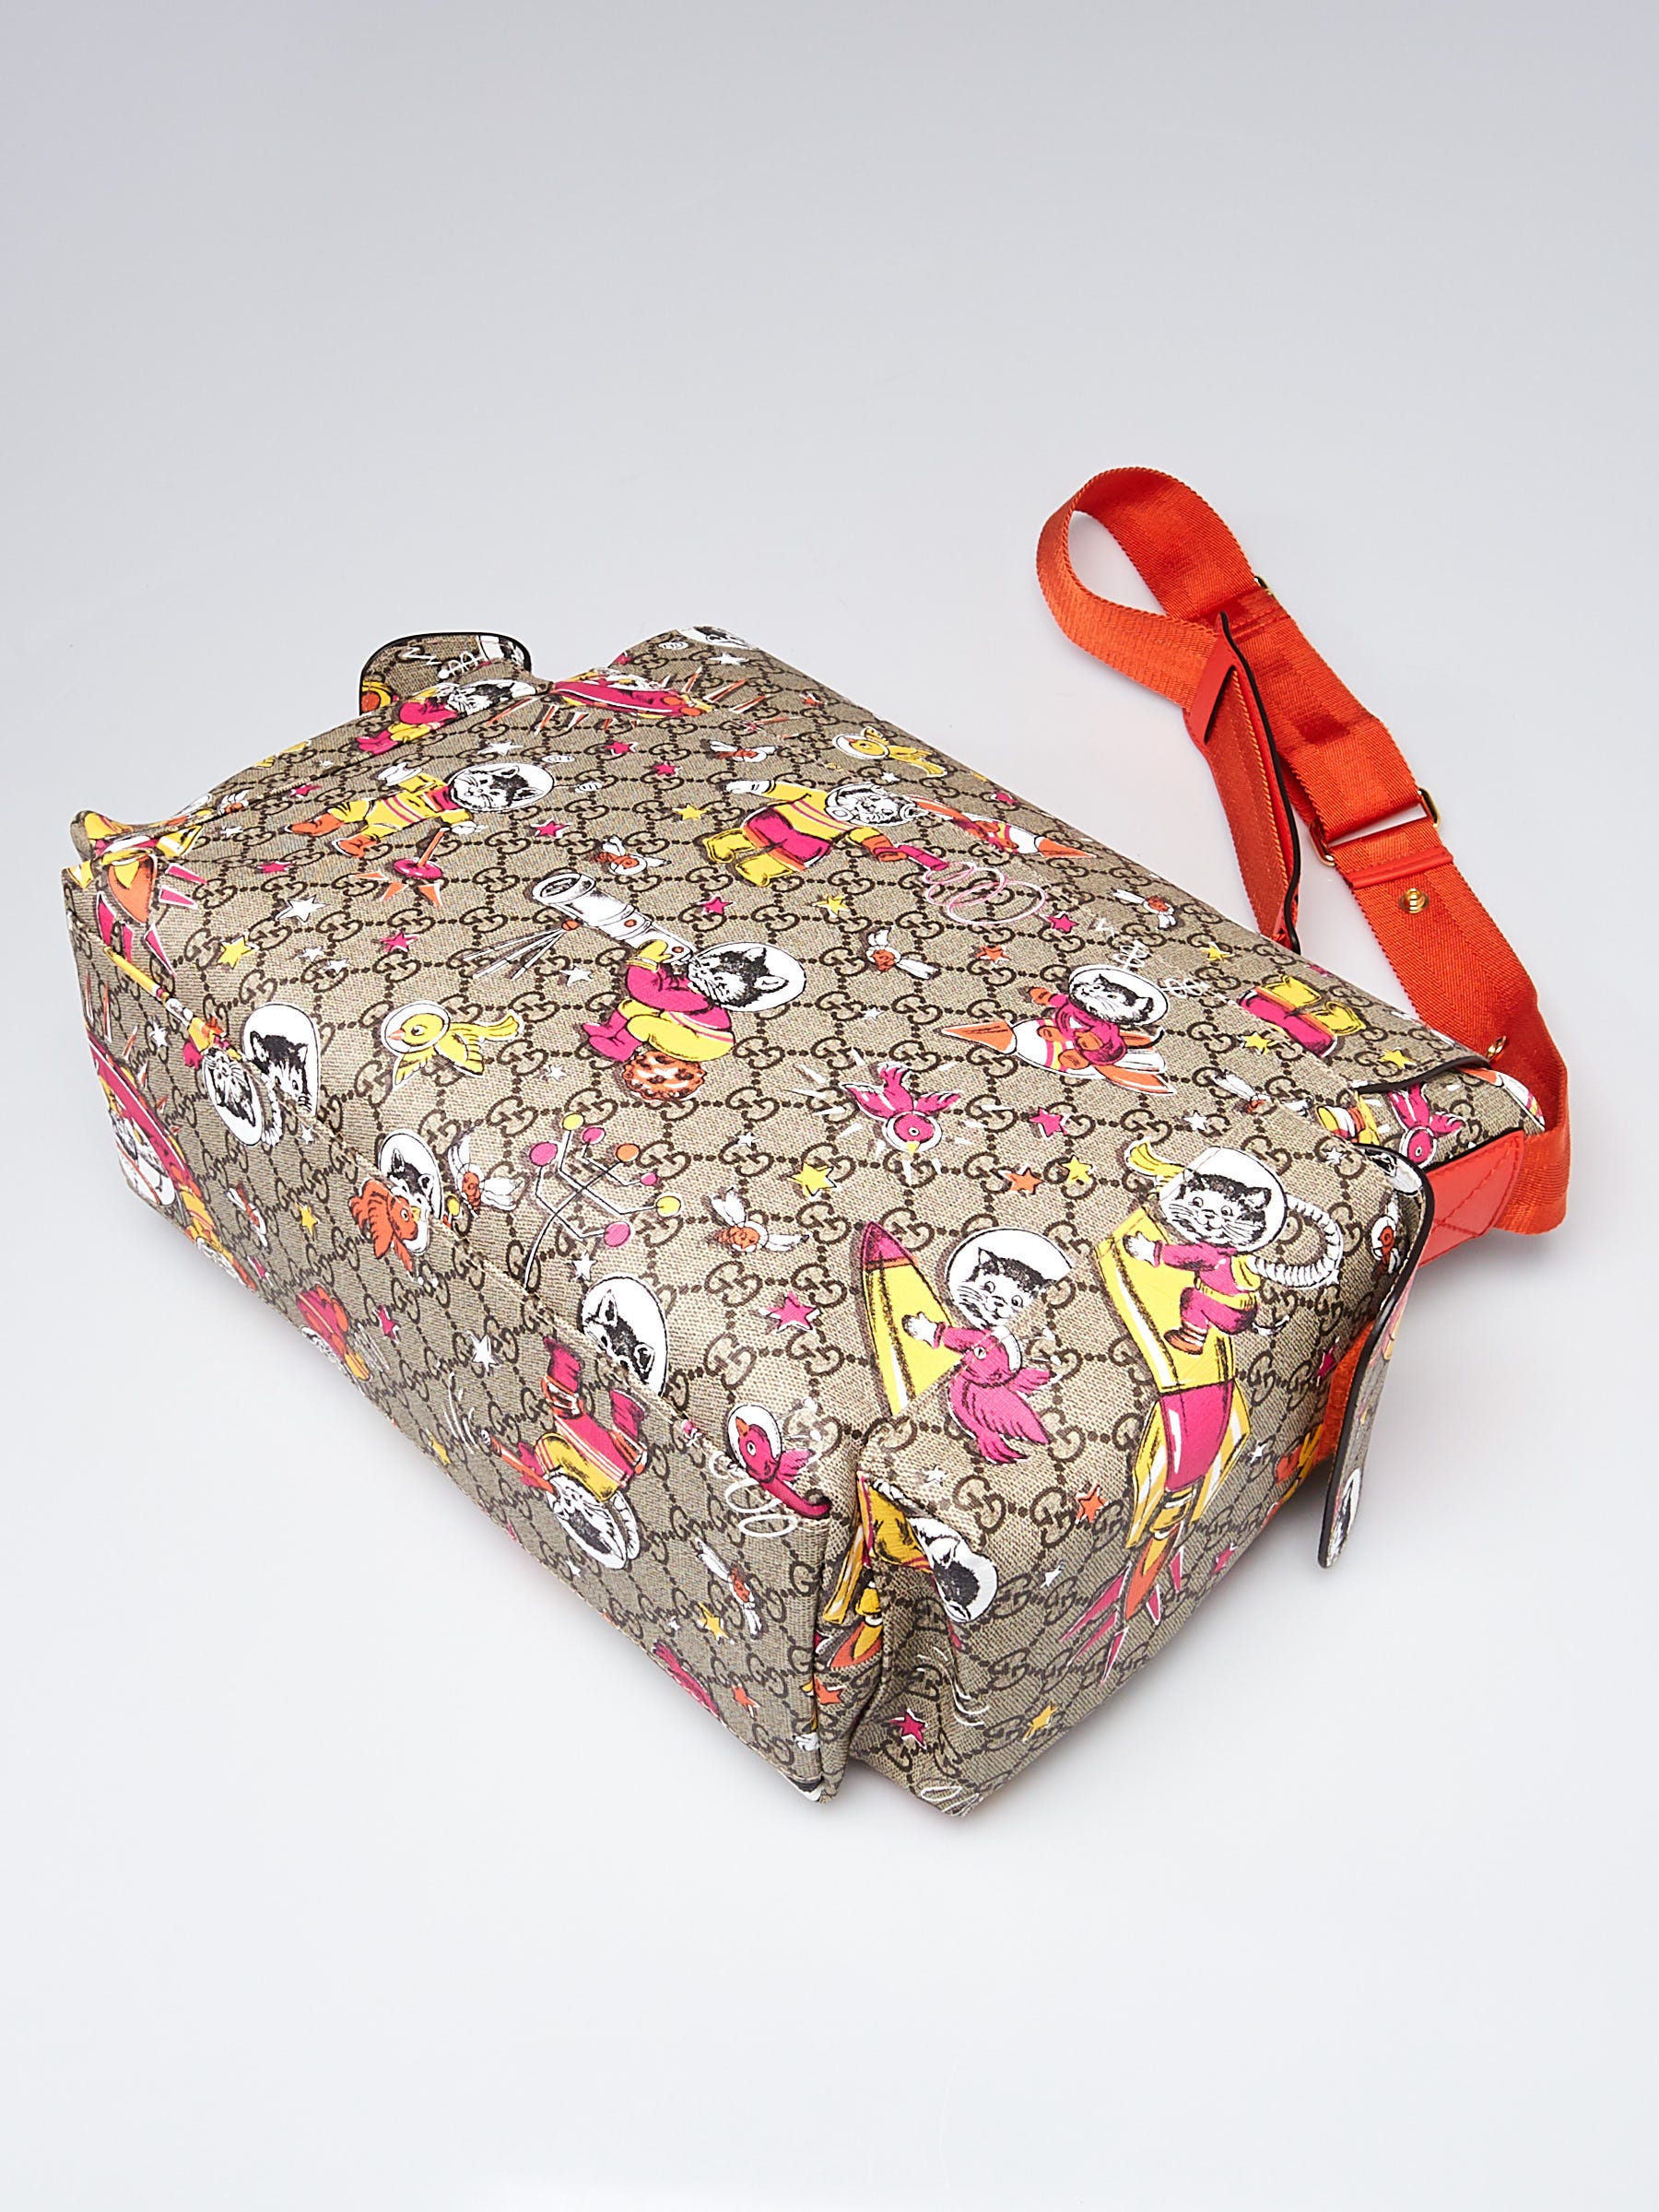 Gucci Kids GG Supreme Diaper Bag - Farfetch